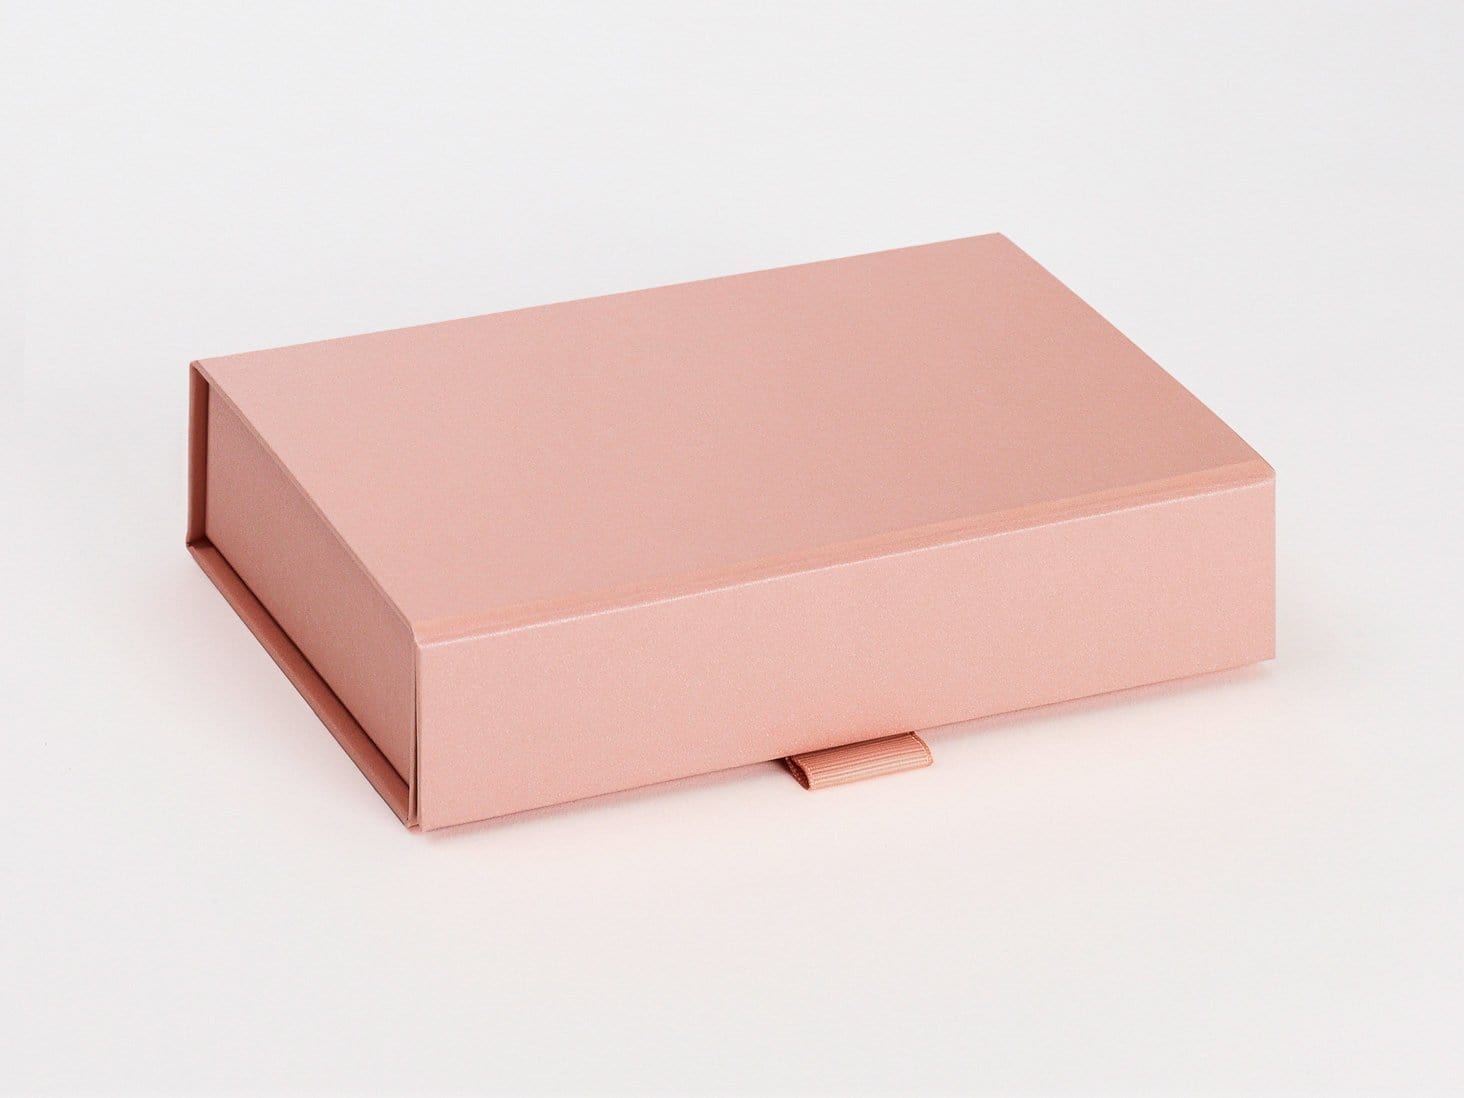 Rose Gold A6 Shallow Gift Box Assembled